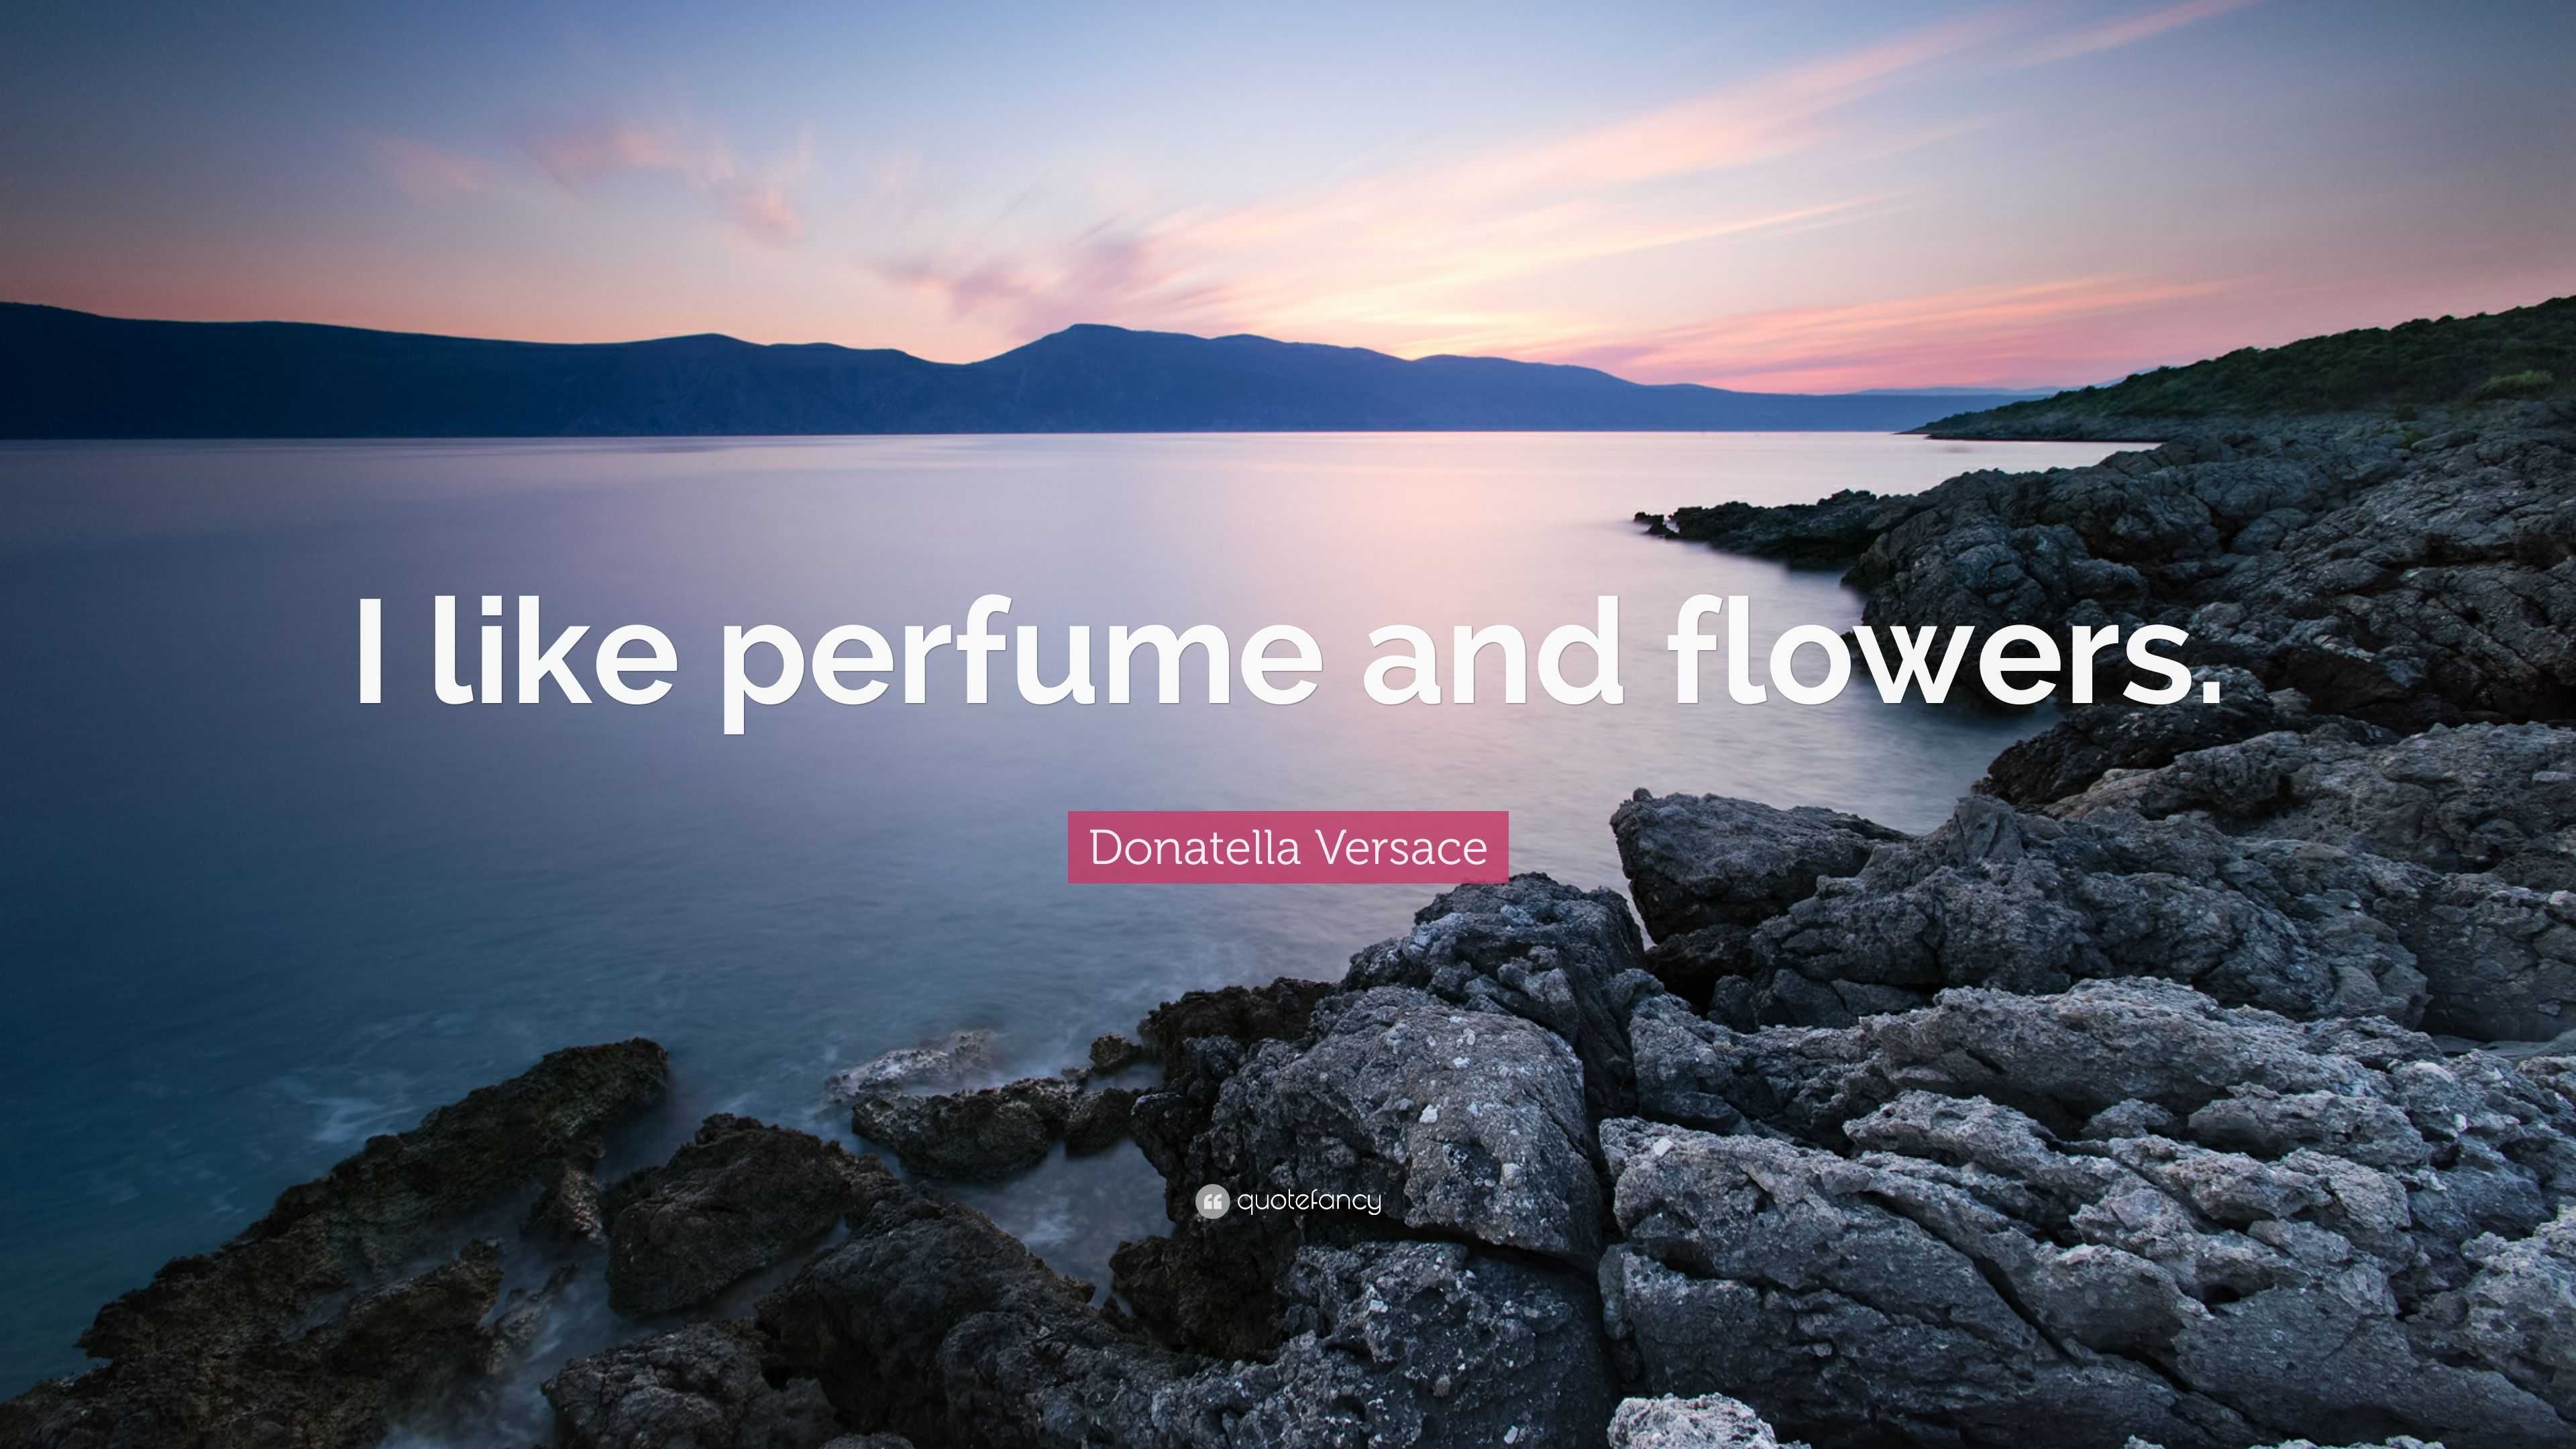 I like perfume and flowers.” – Donatella Versace.